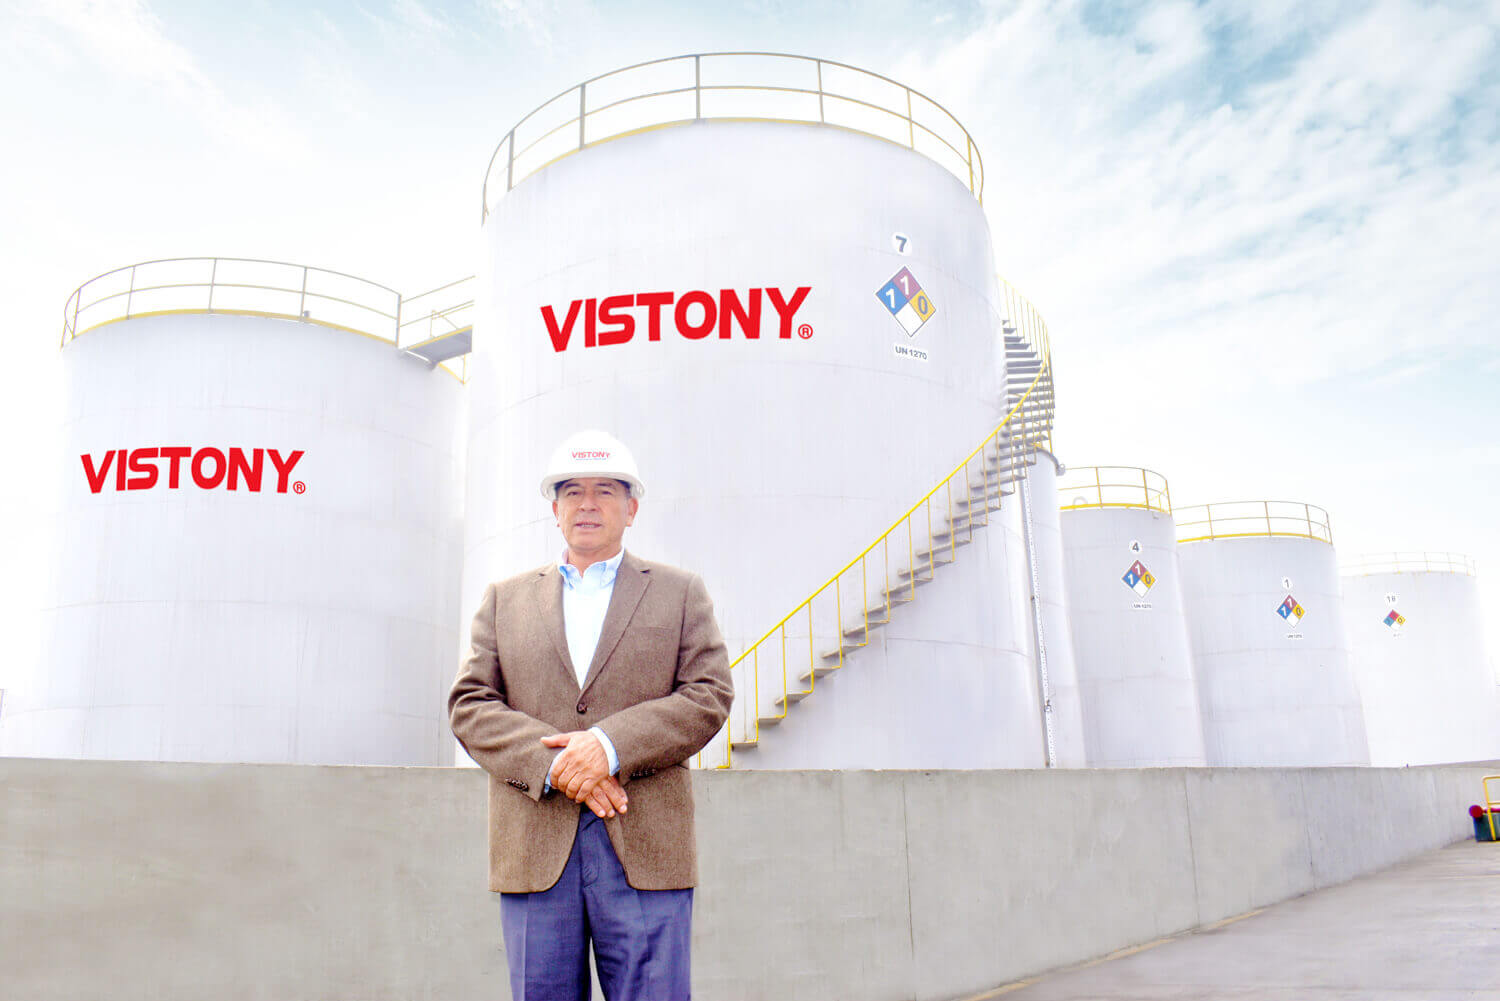 Oswaldo Hidalgo outside the lubricants tanks of Vistony, courtesy of Vistony